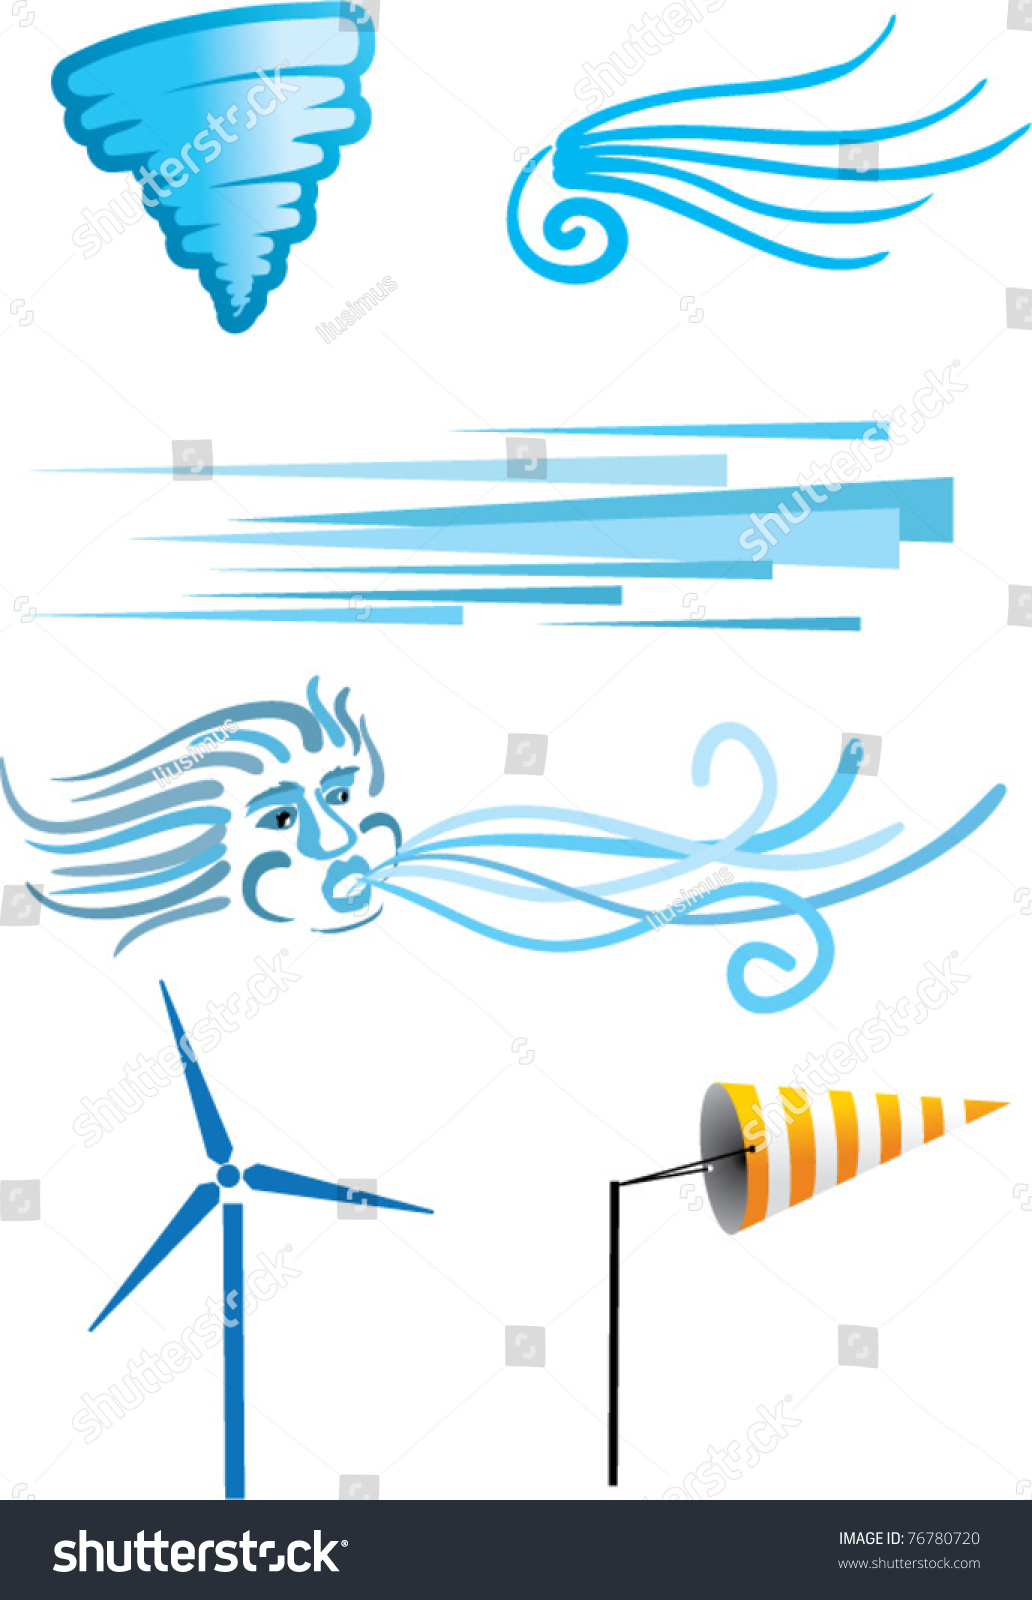 Wind Symbols Stock Vector 76780720 - Shutterstock